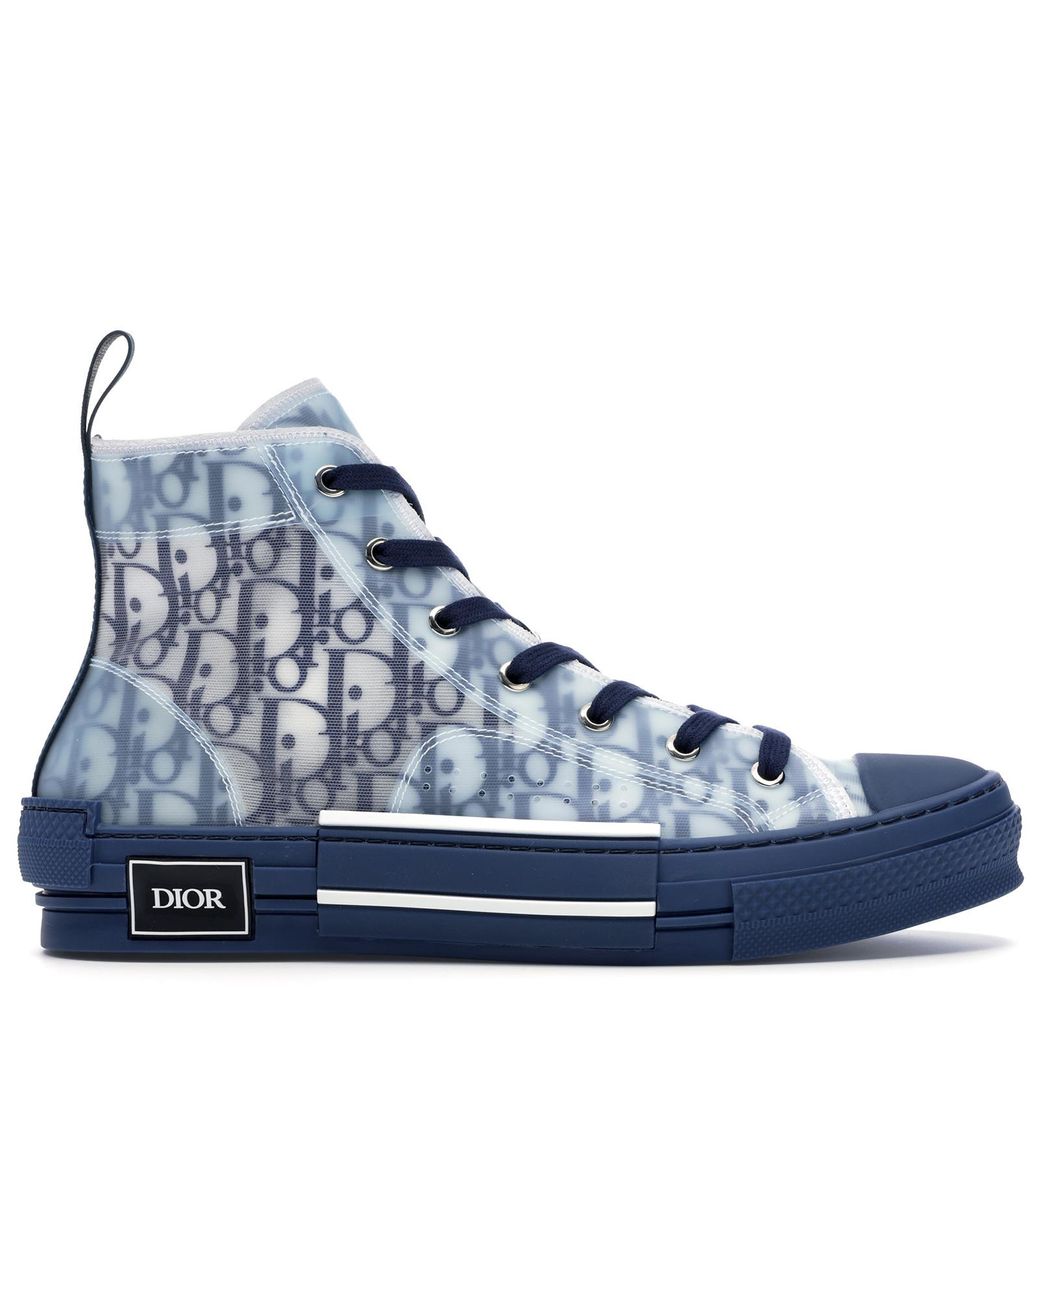 dior shoes blue